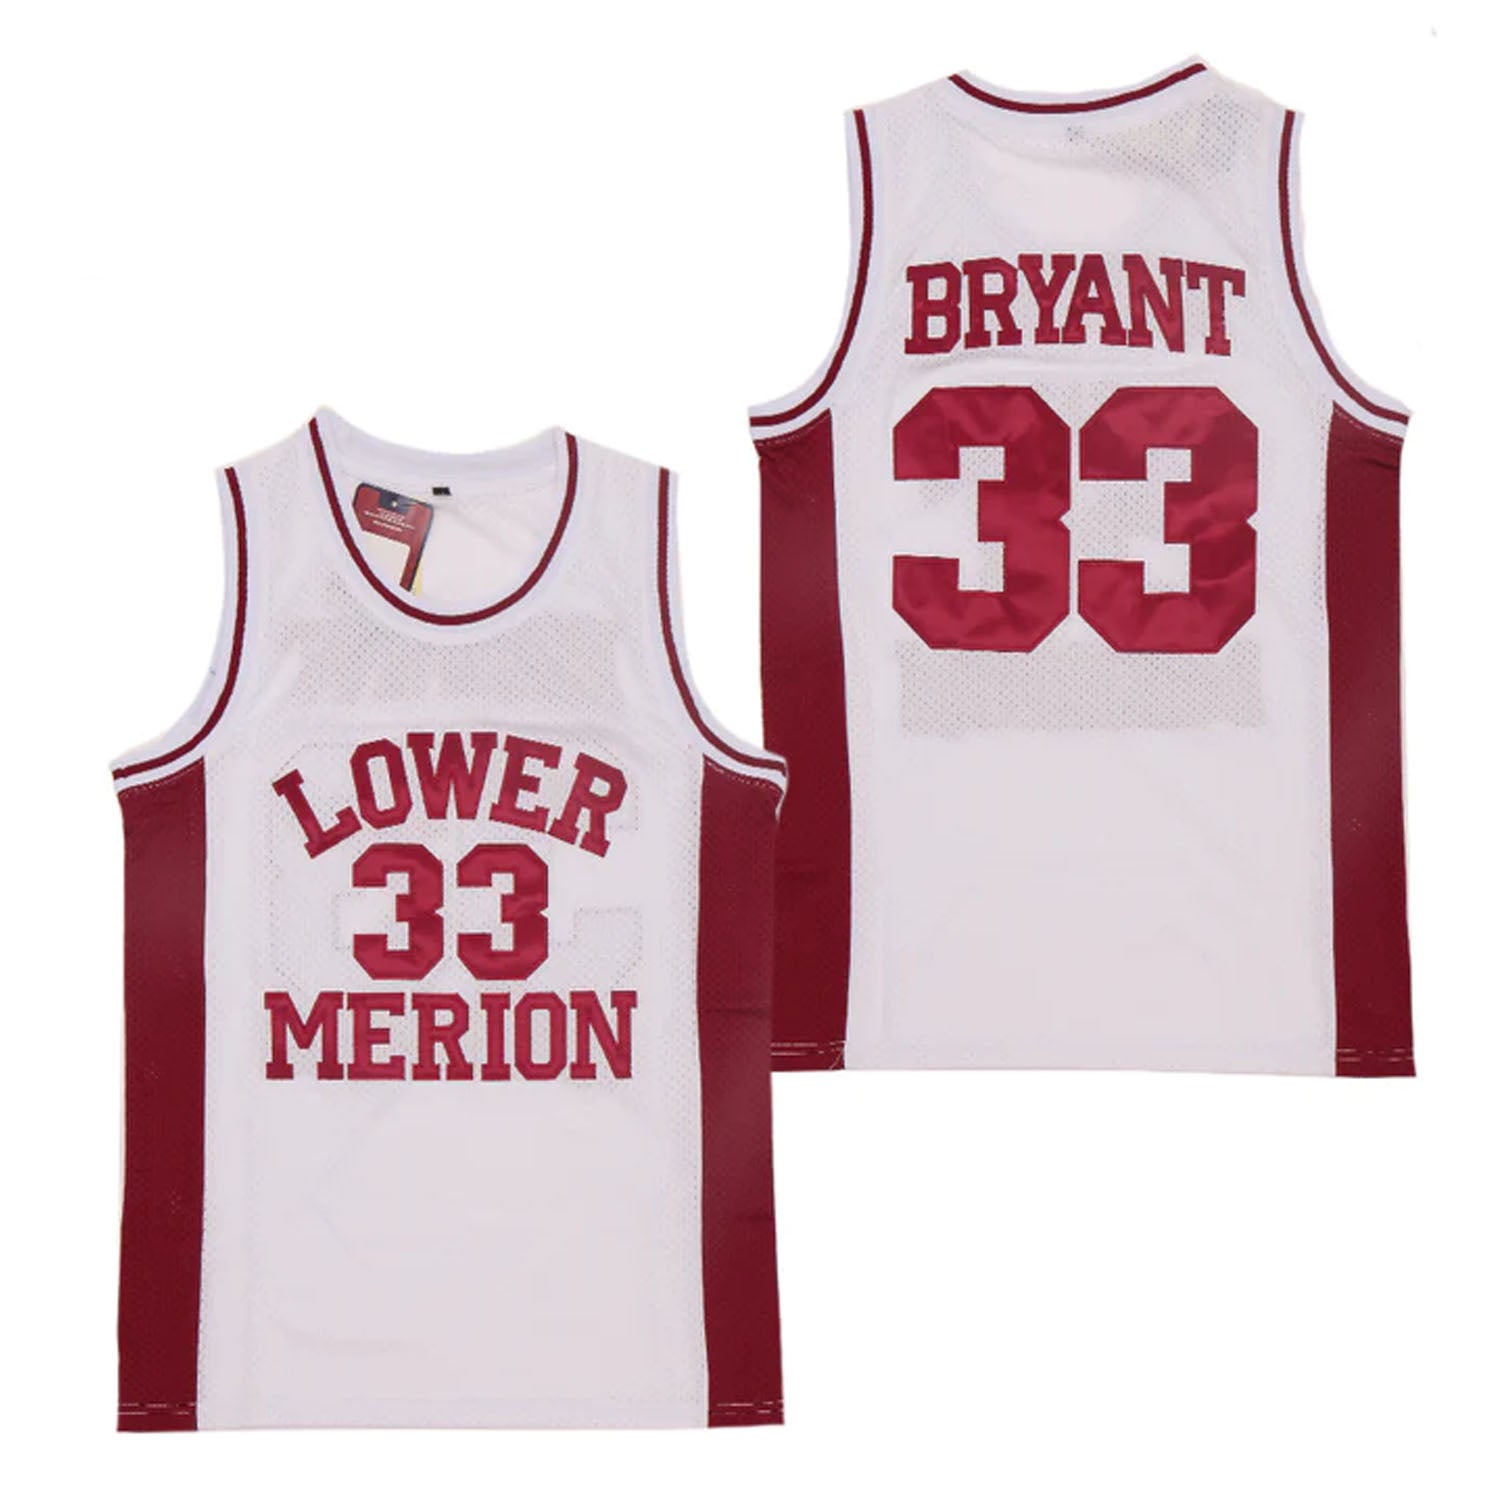 Kobe Bryant Lakers/High School Jersey Men's M/L Retro